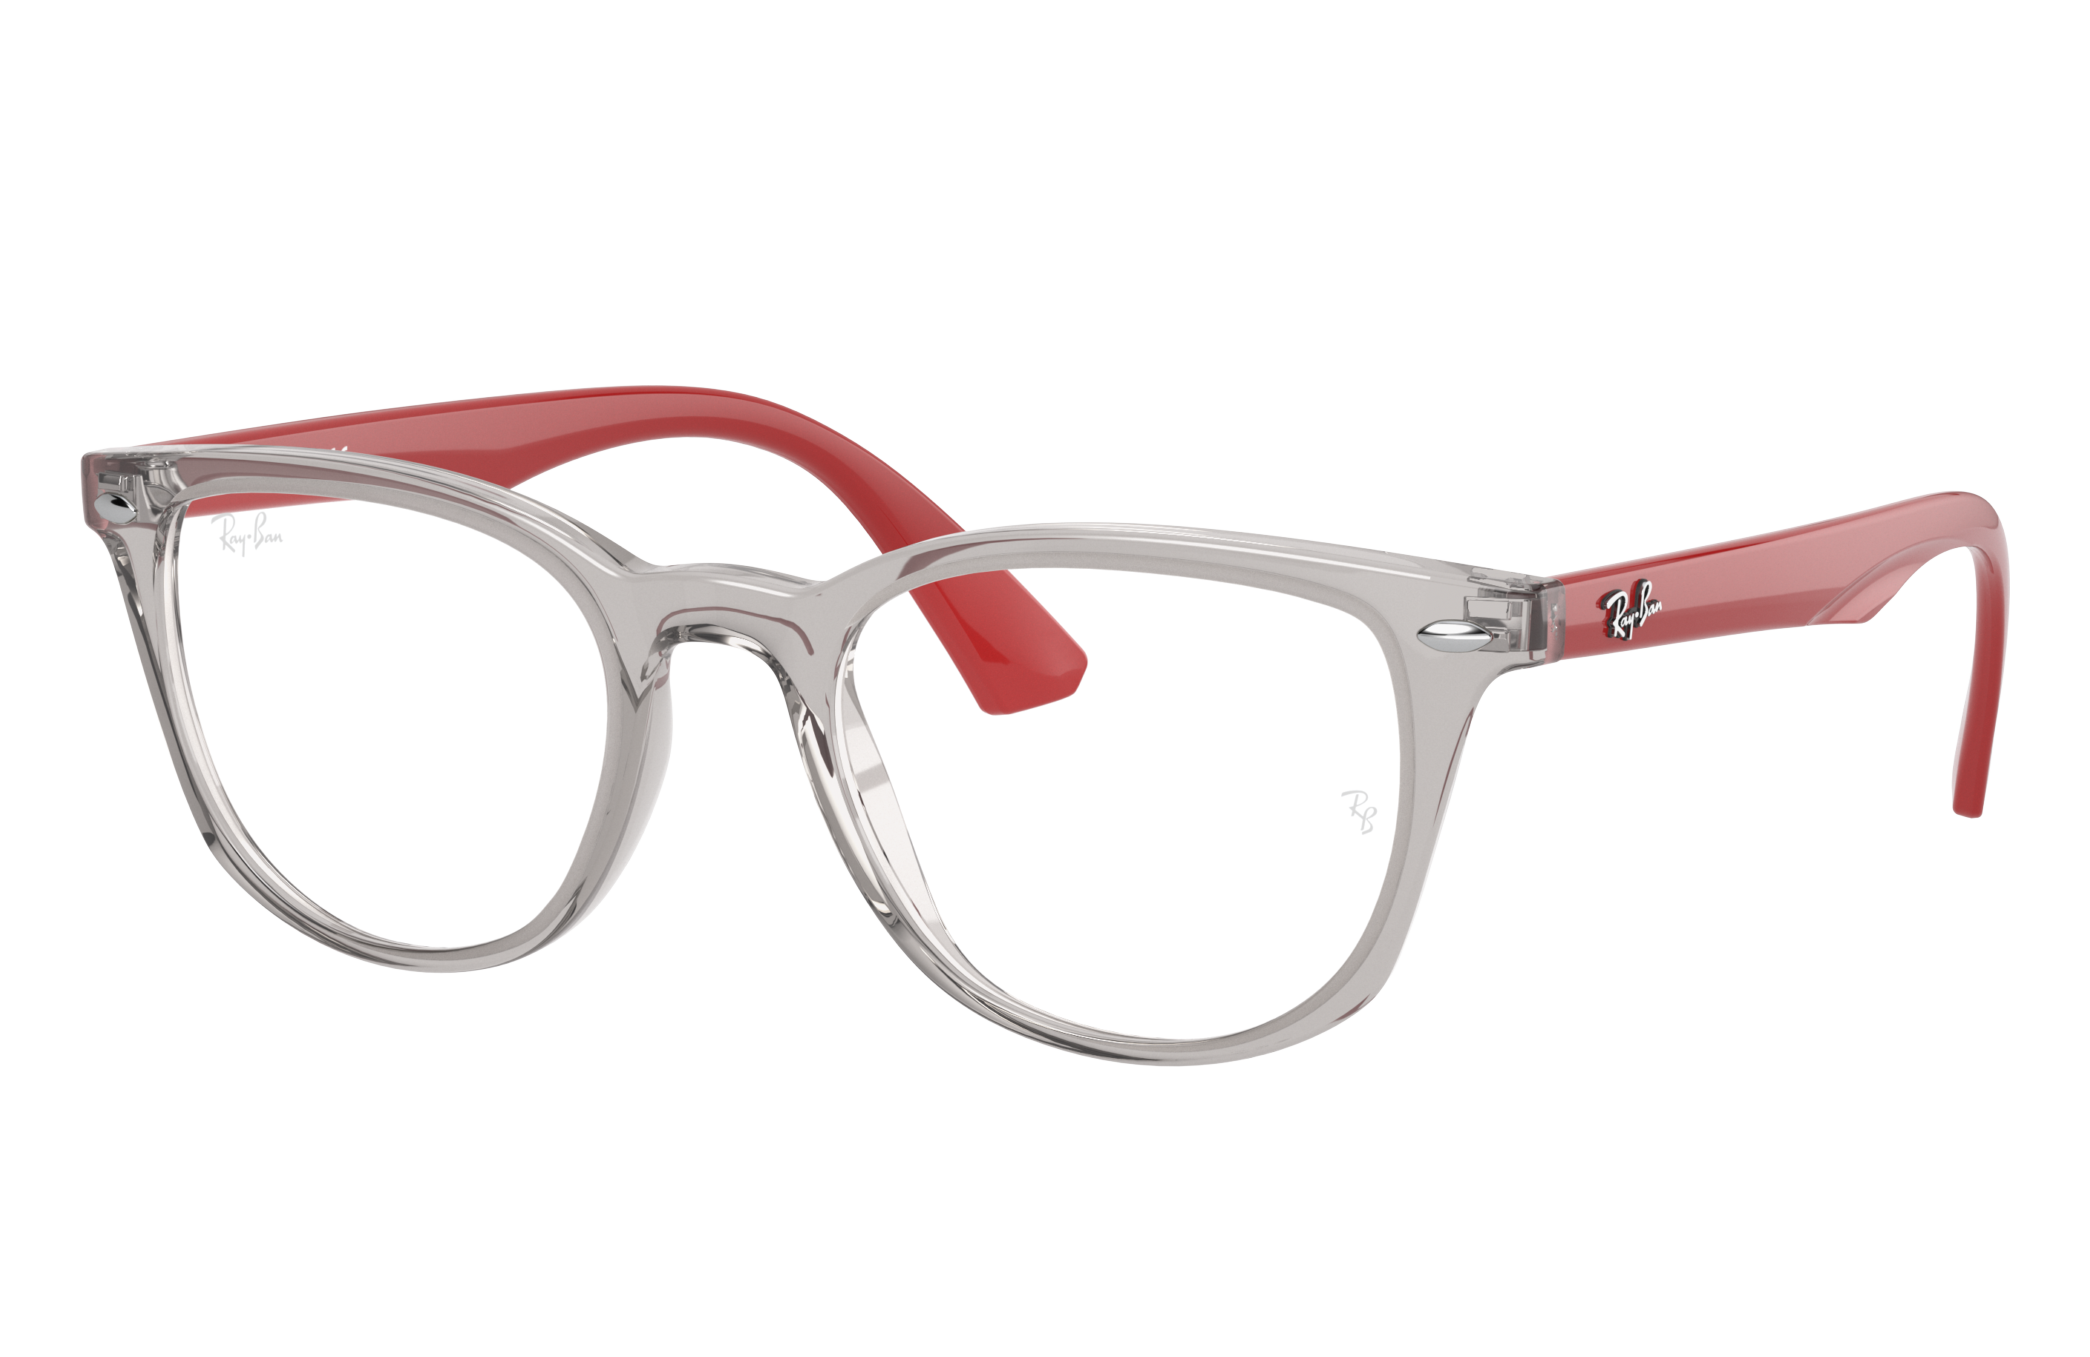 Rb1601 Optics Kids Eyeglasses with Transparent Grey Frame | Ray-Ban®